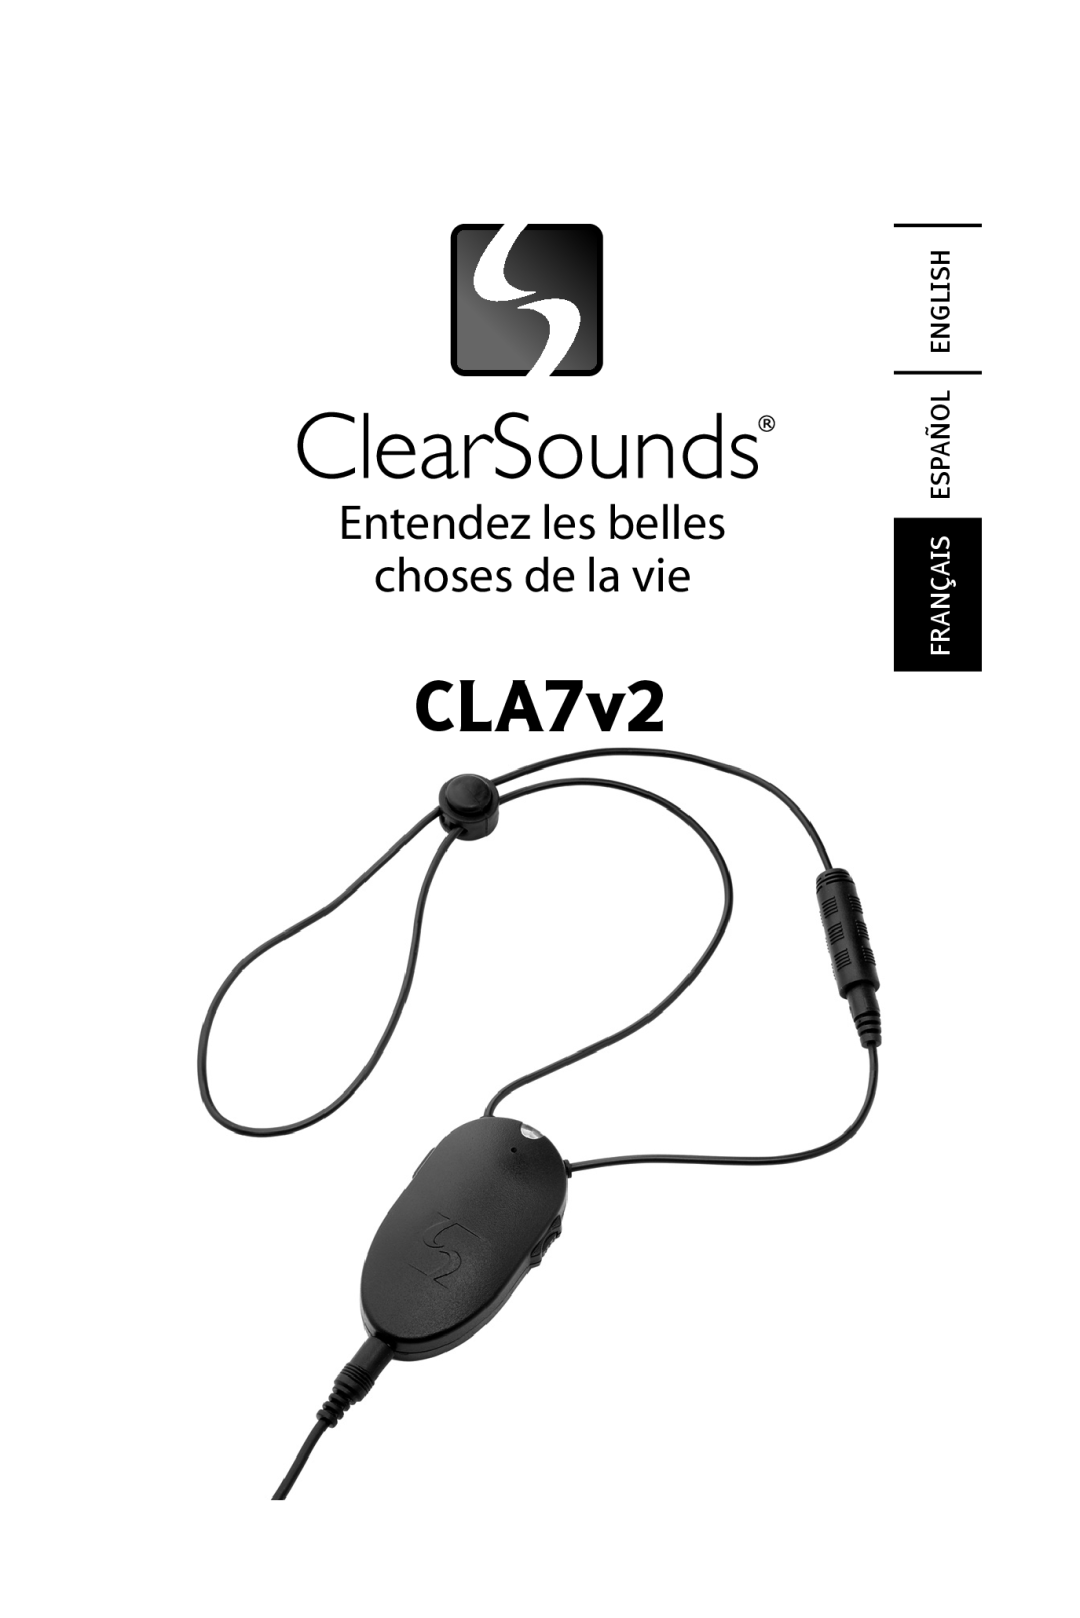 ClearSounds CLA7V2 manual CLA7v2, Entendez les belles choses de la vie, FRANÇAIS Español English, Français 